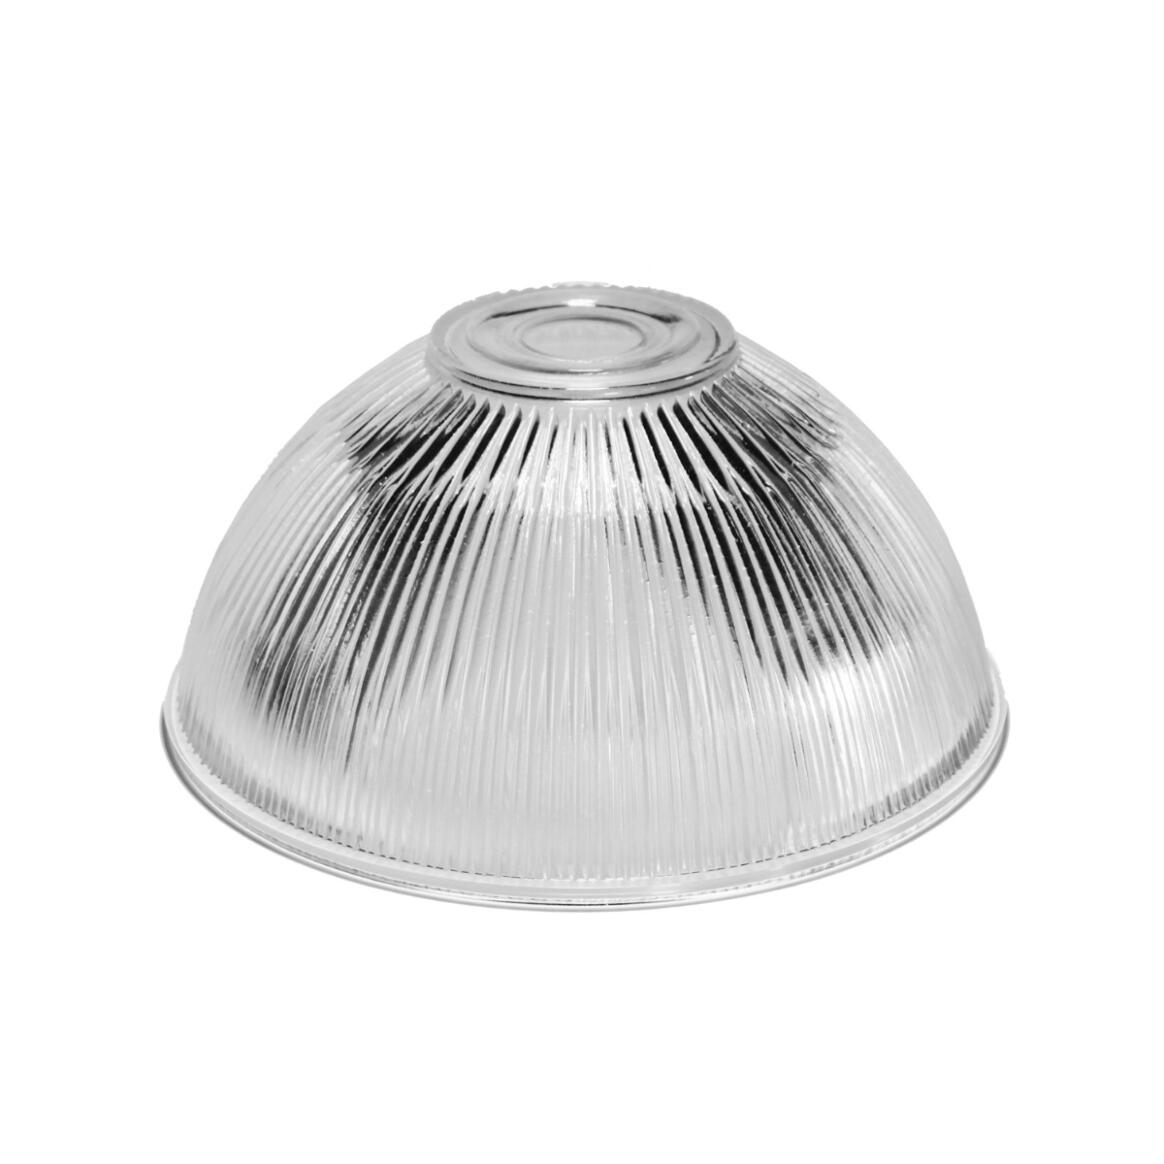 Holophane glass lamp shade 7.7" main product image